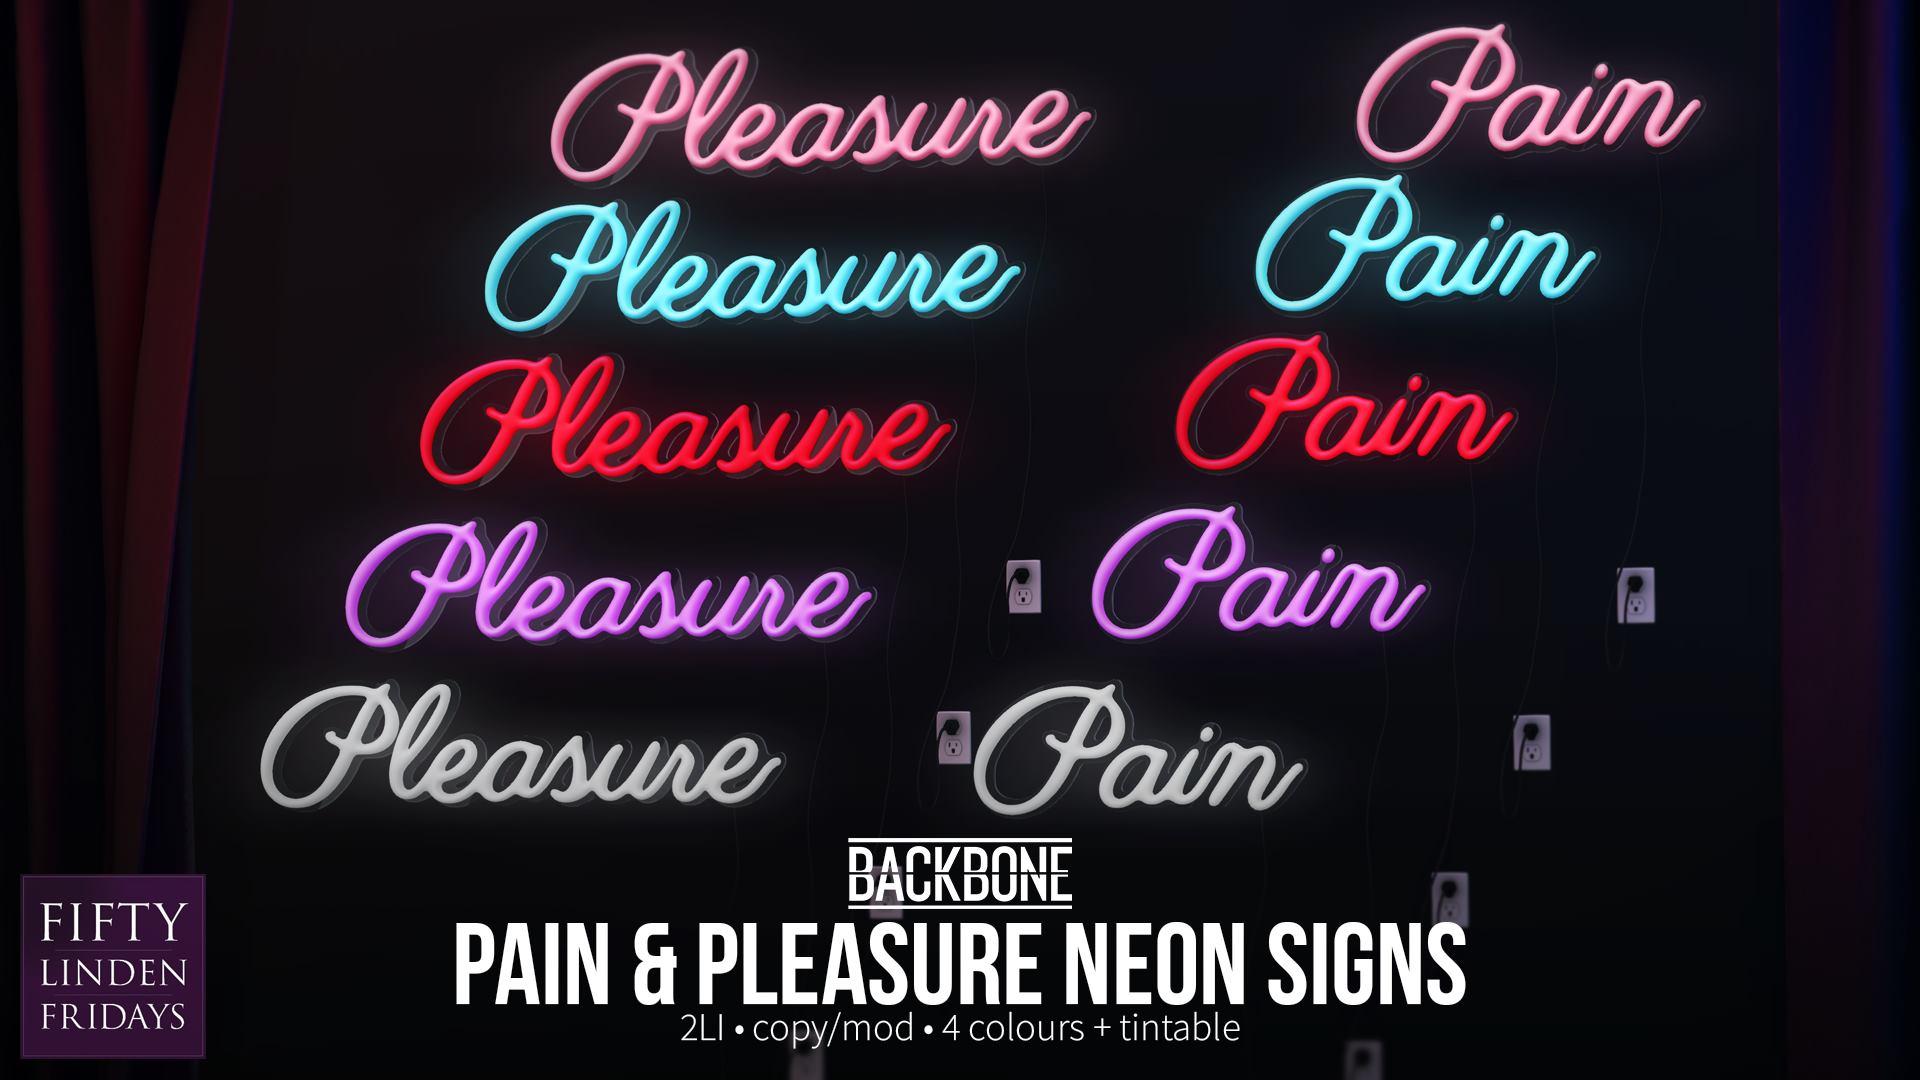 BackBone – Pain & Pleasure Neon Signs